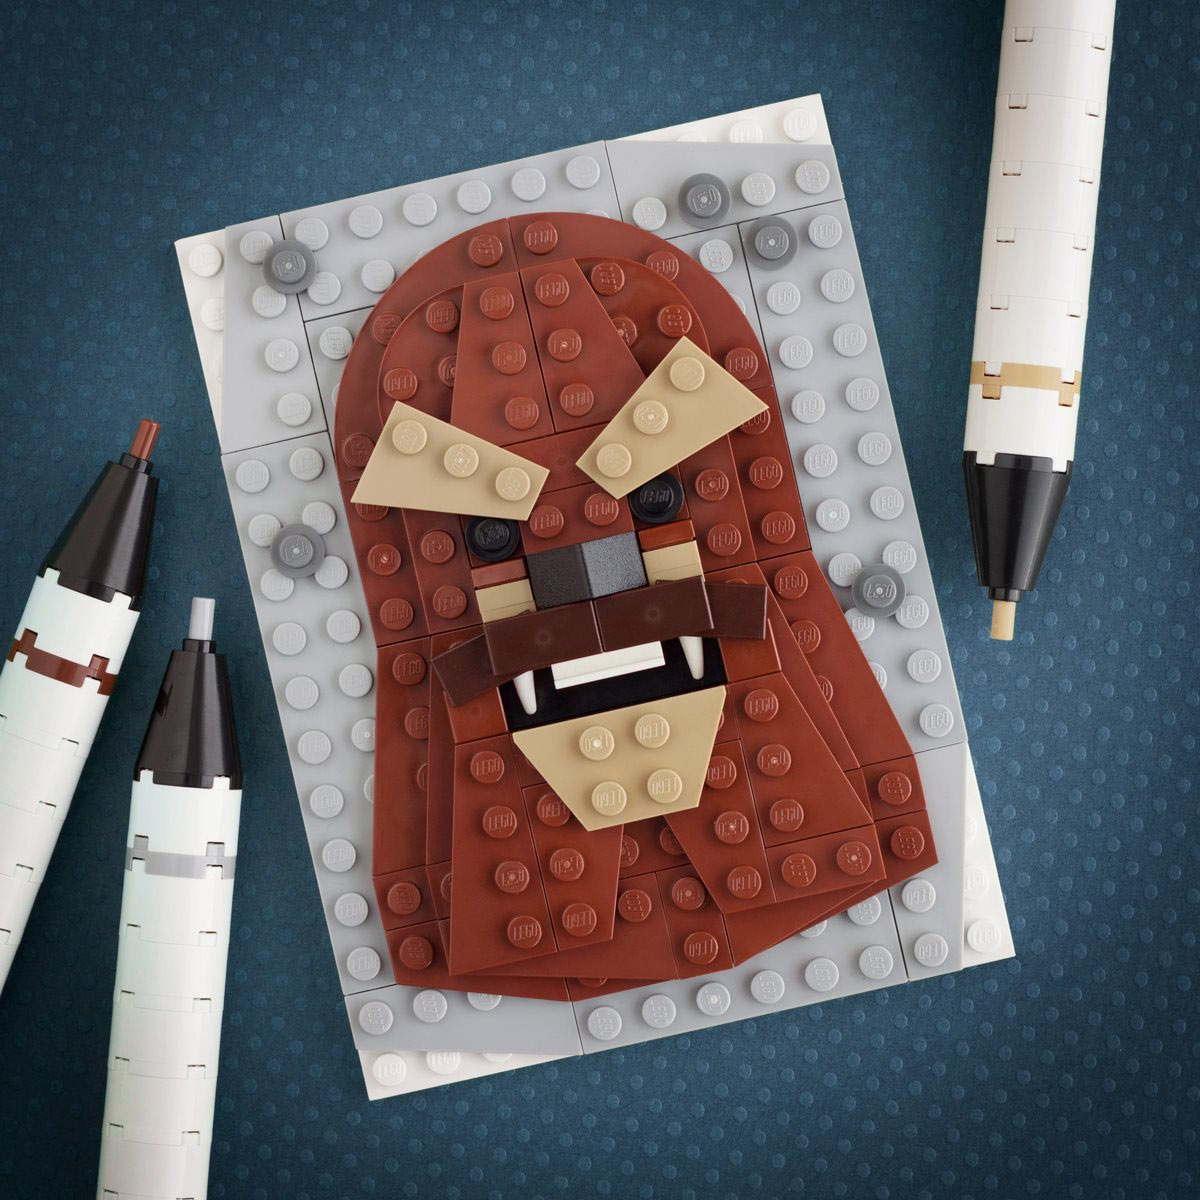 Retrato de Chewbacca hecho con LEGO